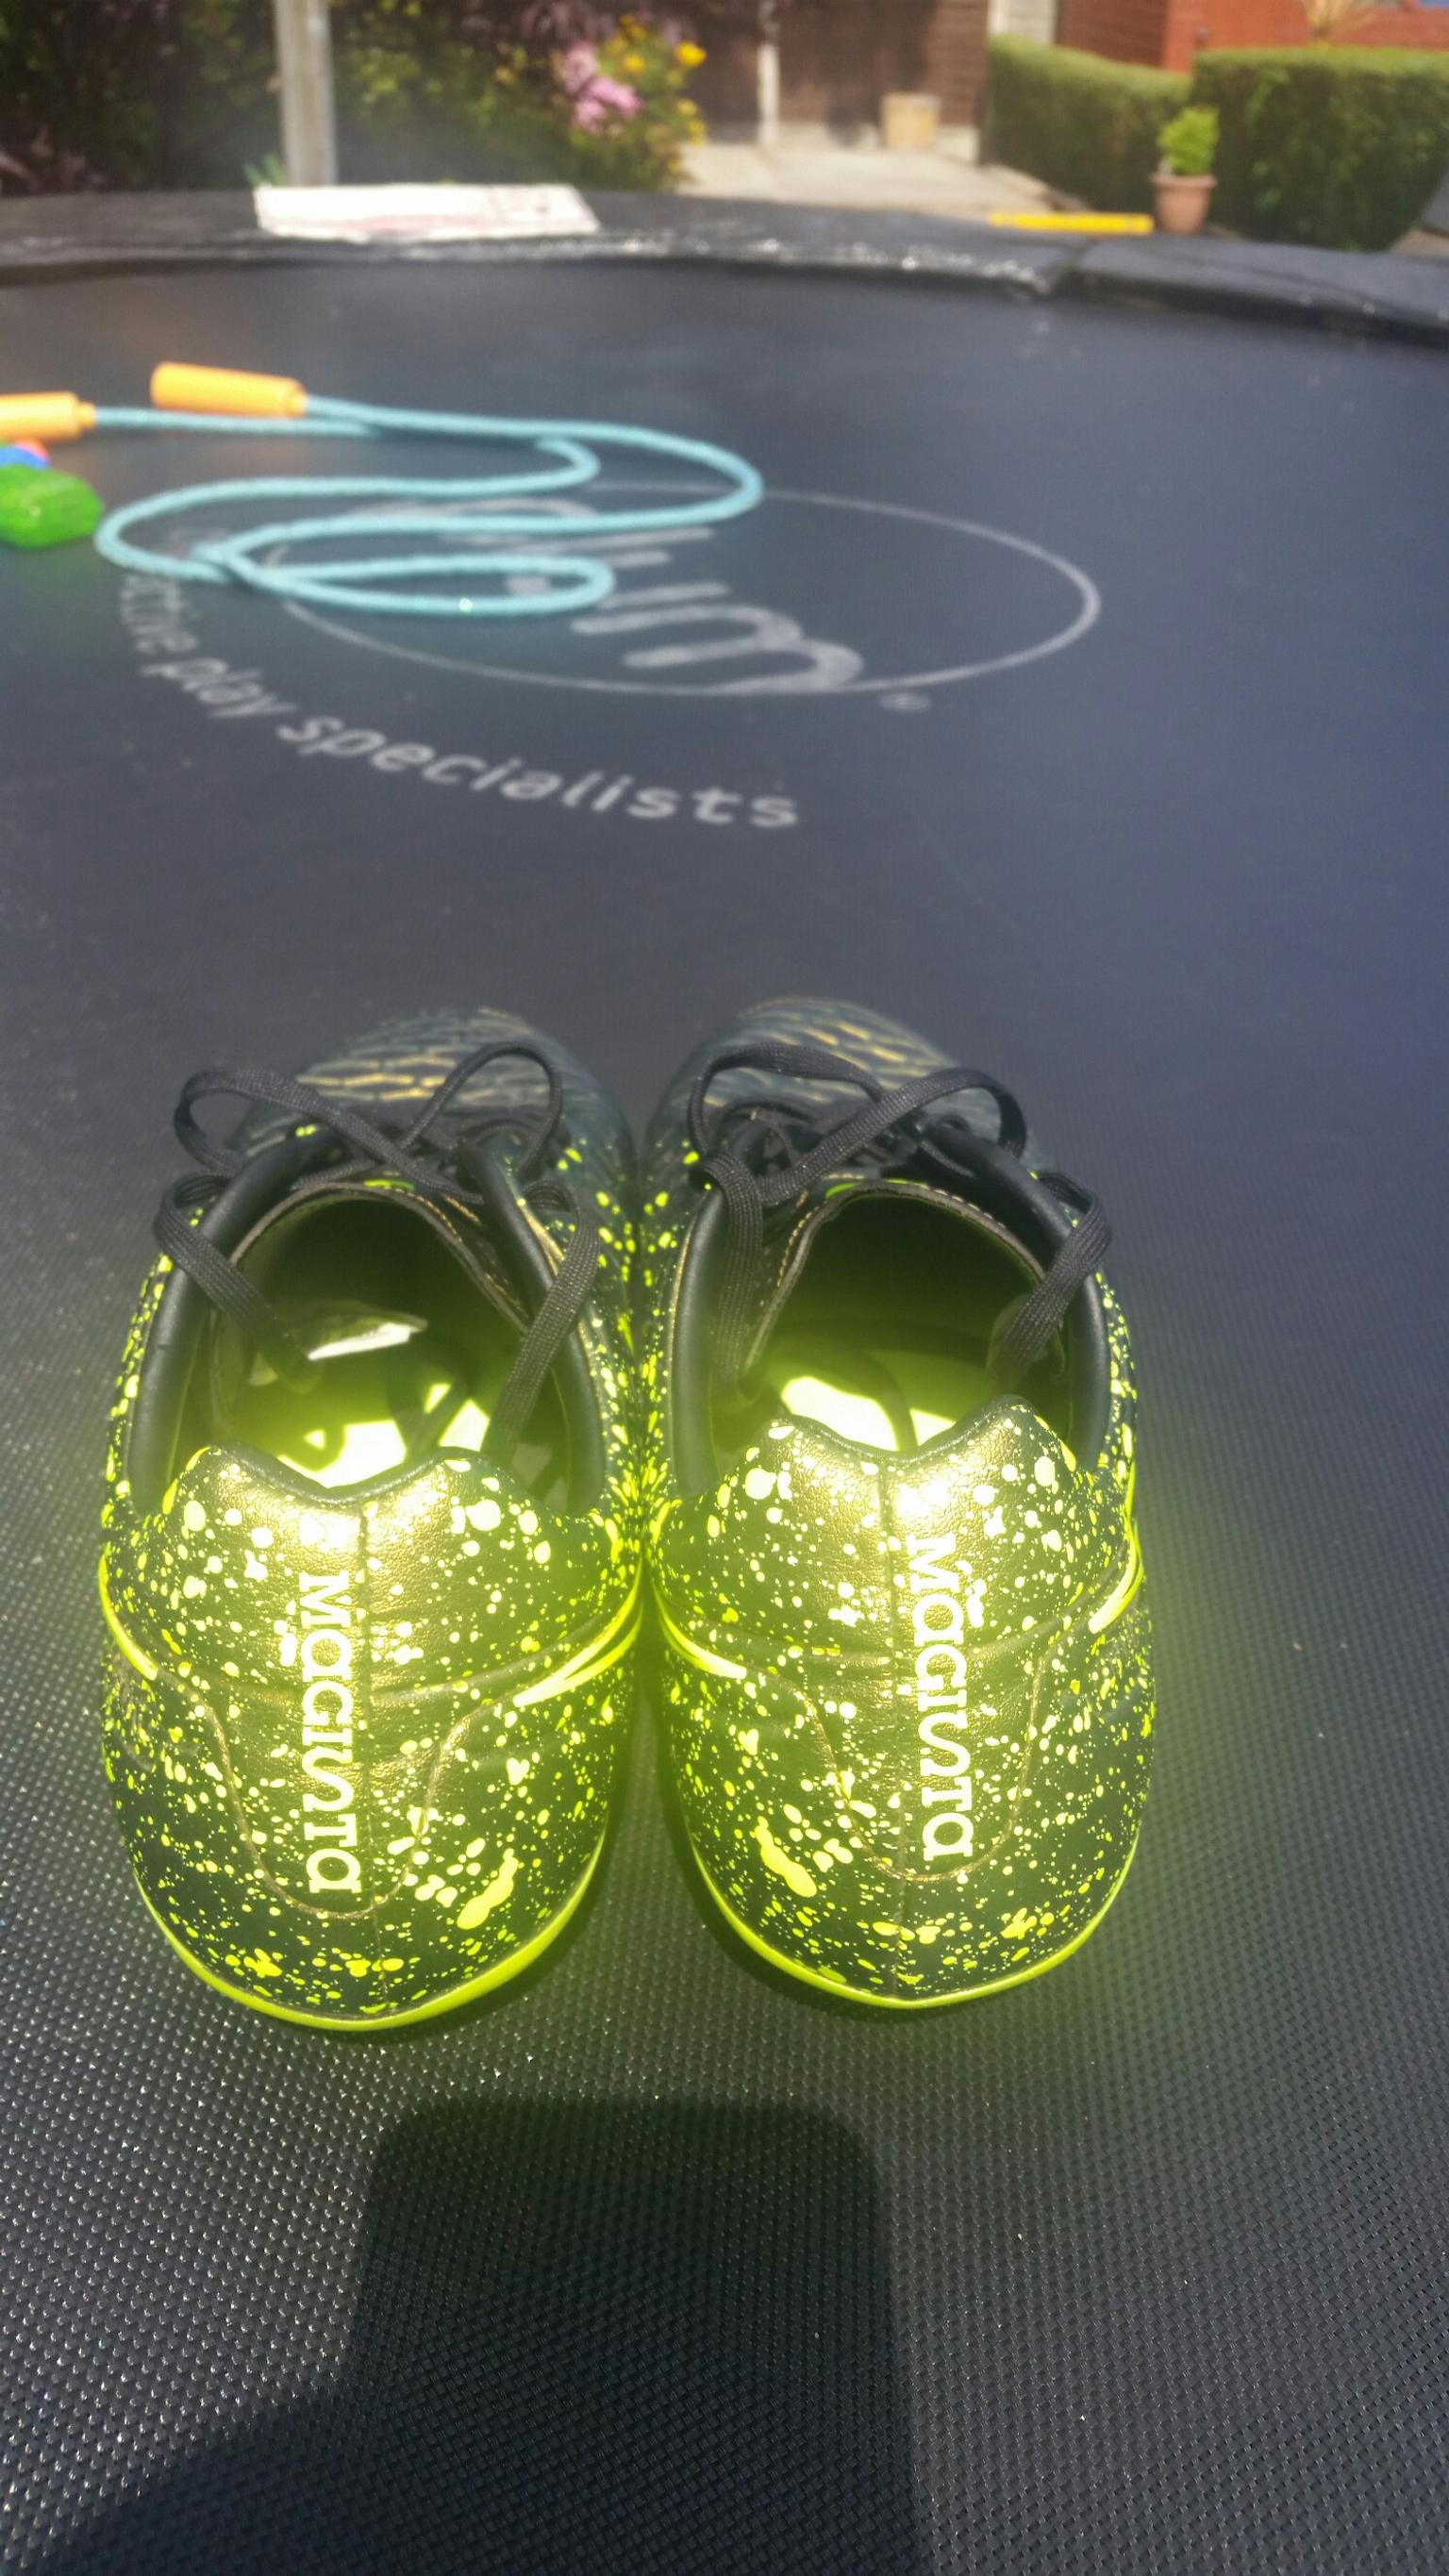 Magista Obra 2 AG Pro 'Laser Orange' Nike 844594 802